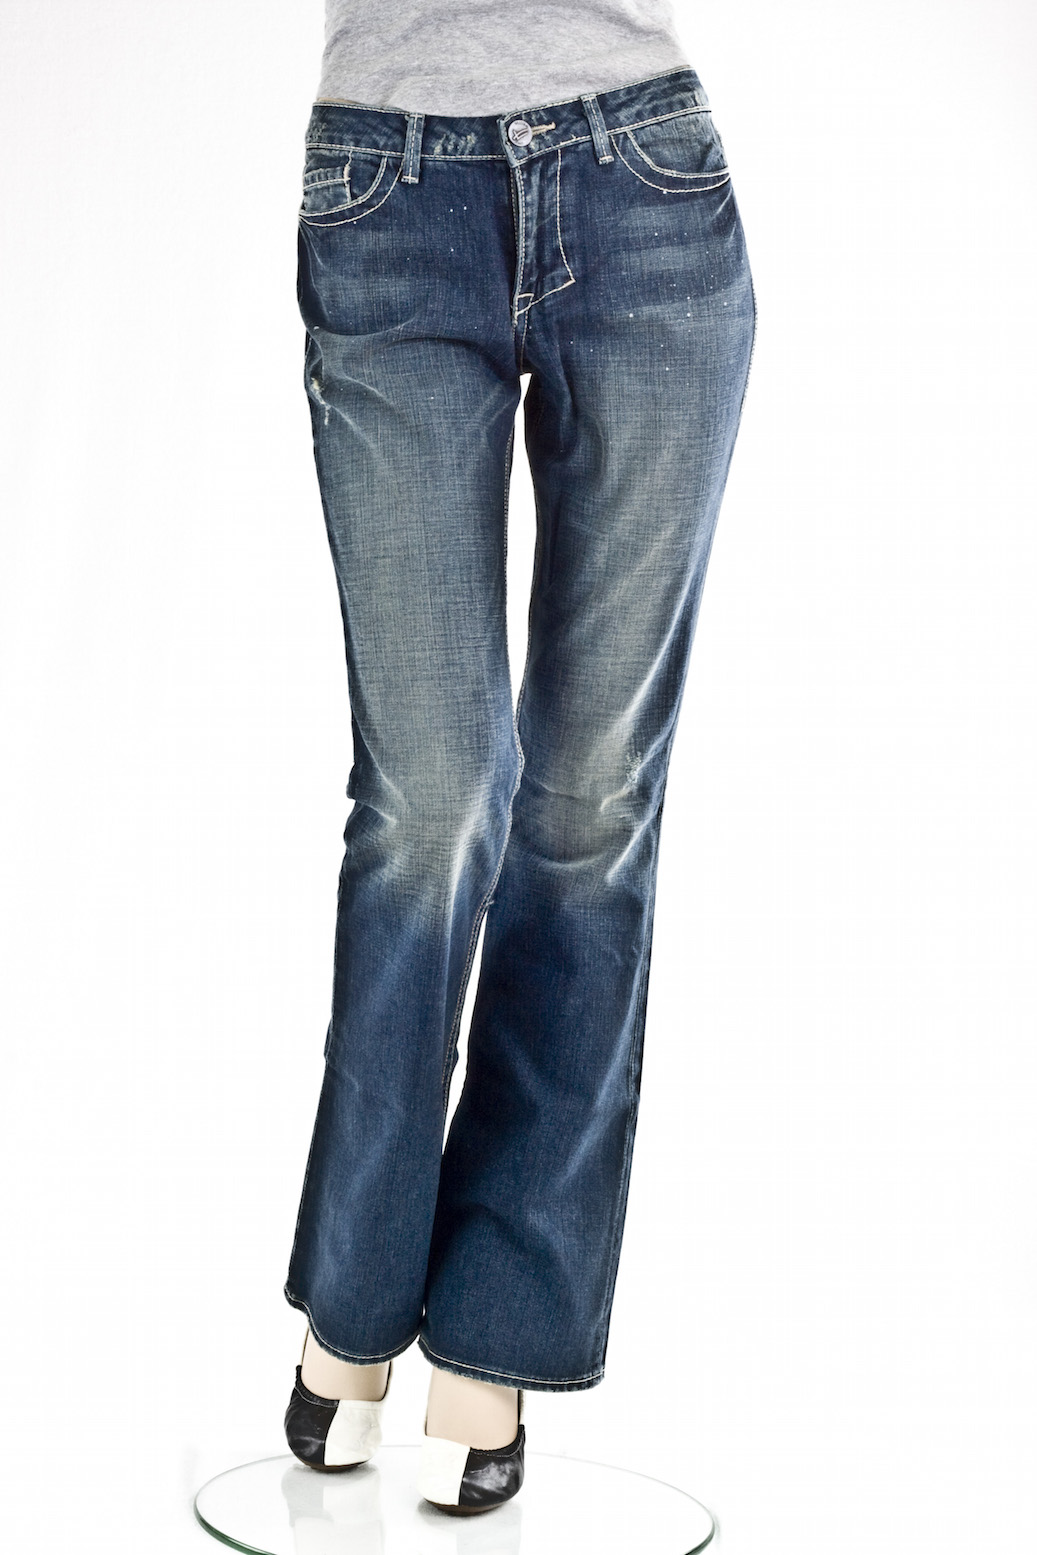 Женские джинсы William Rast "Буткат" STELLA CLASSIC RISE BOOTCUT JEAN интернет-магазин Fashion Jeans